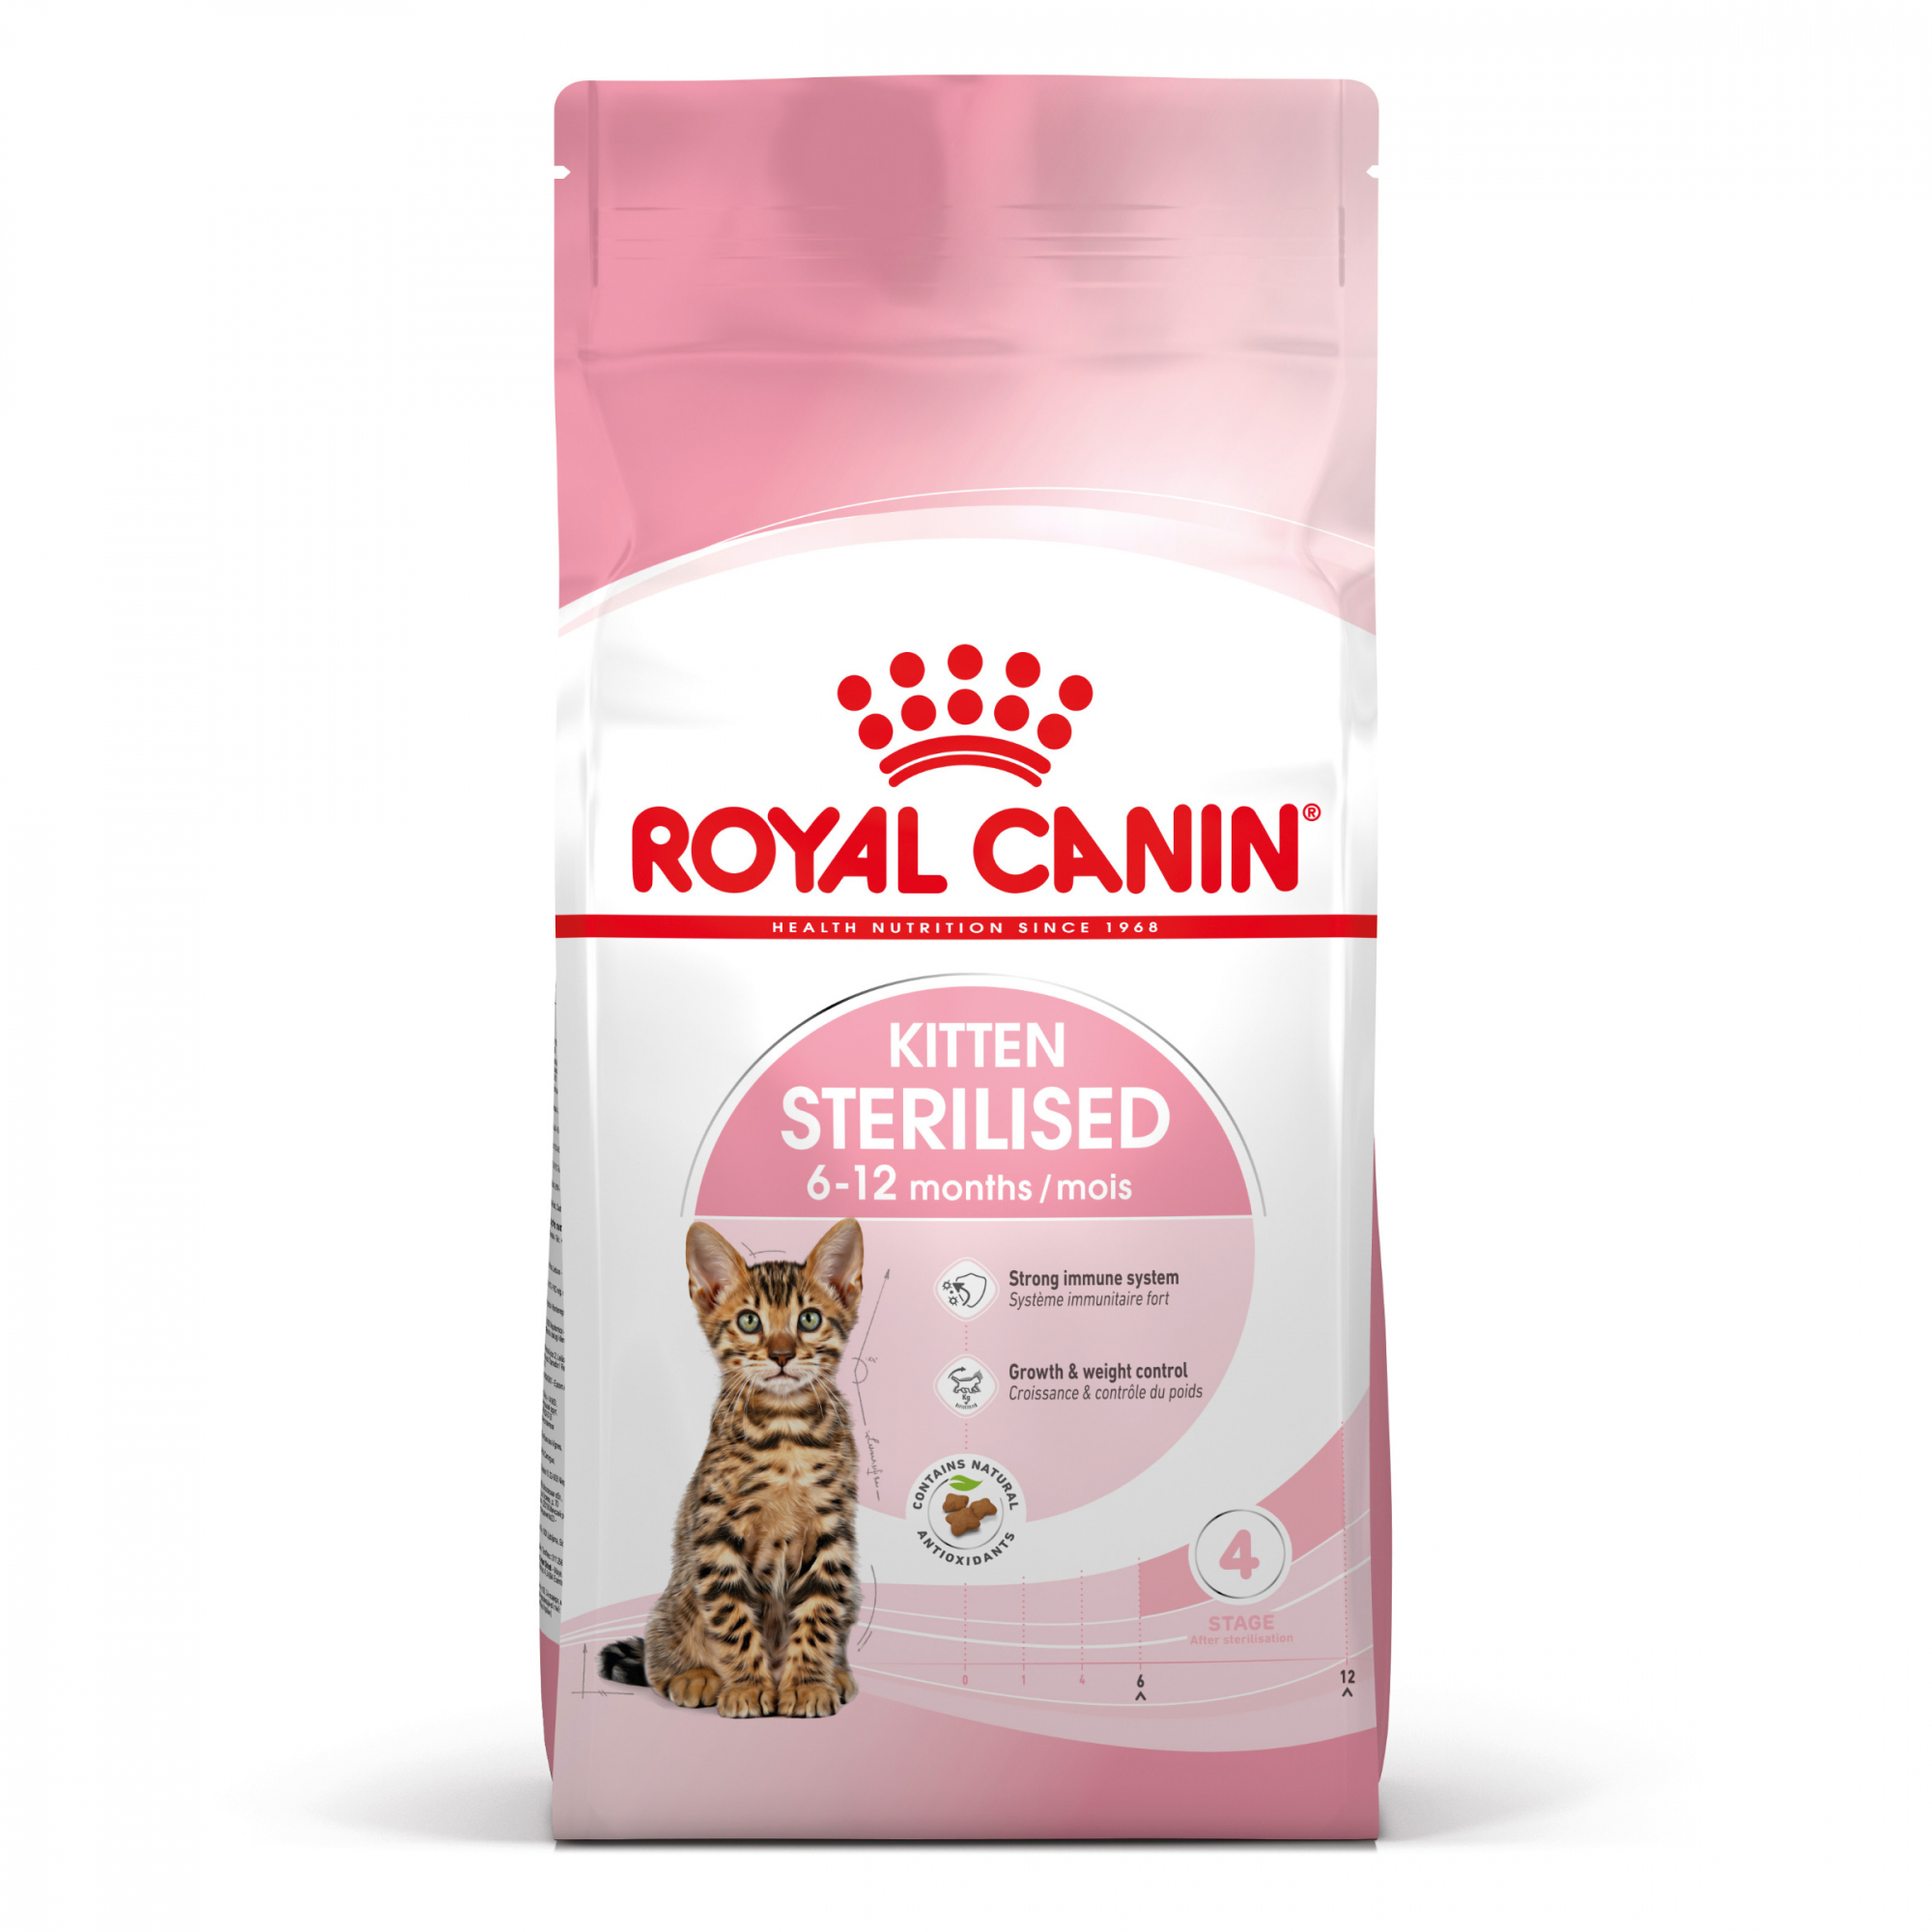 Royal Canin Kitten Sterilised Ração seca para gato de 6 até 12 meses